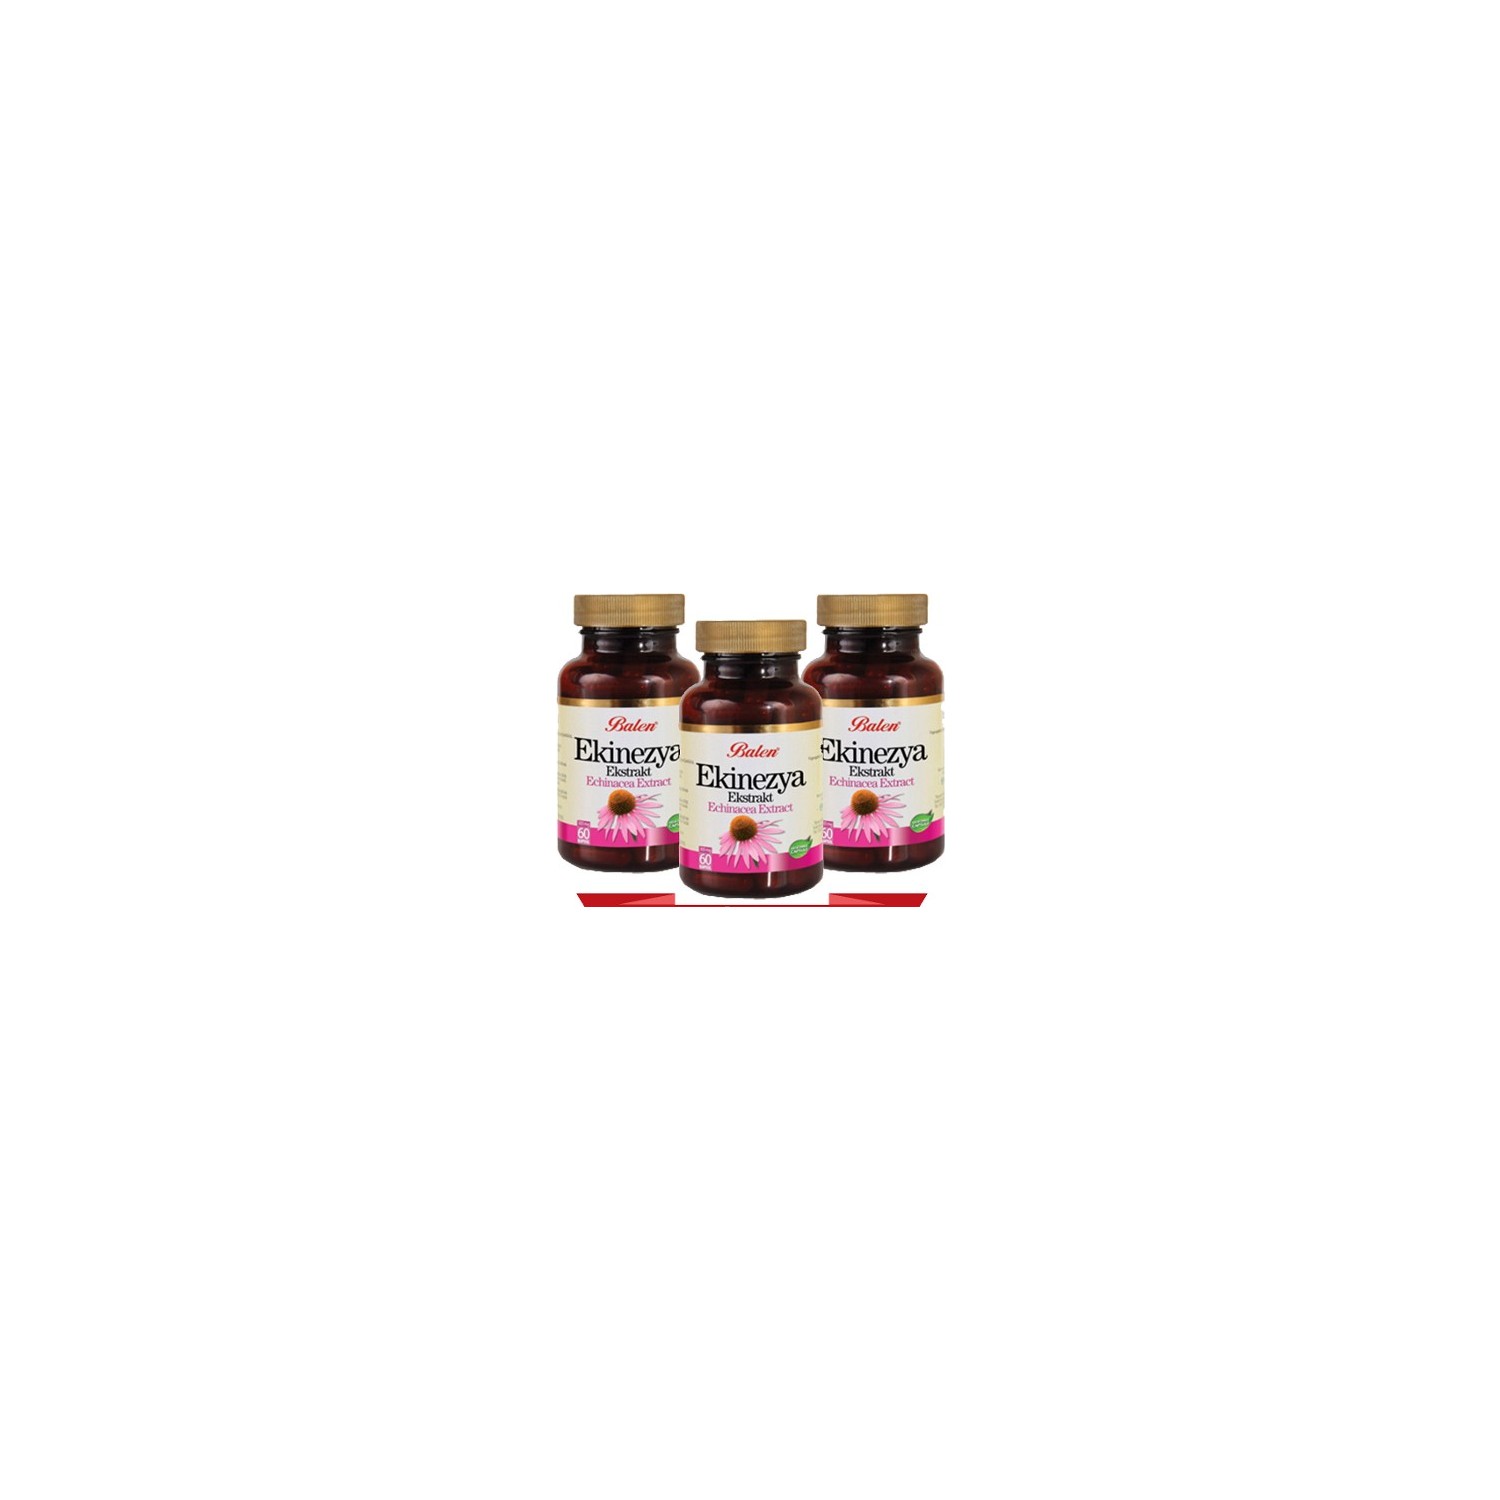 Пищевая добавка Balen эхинацея 300 мг, 3 упаковки по 60 капсул royal jelly 1 500 mg 60 veg capsules